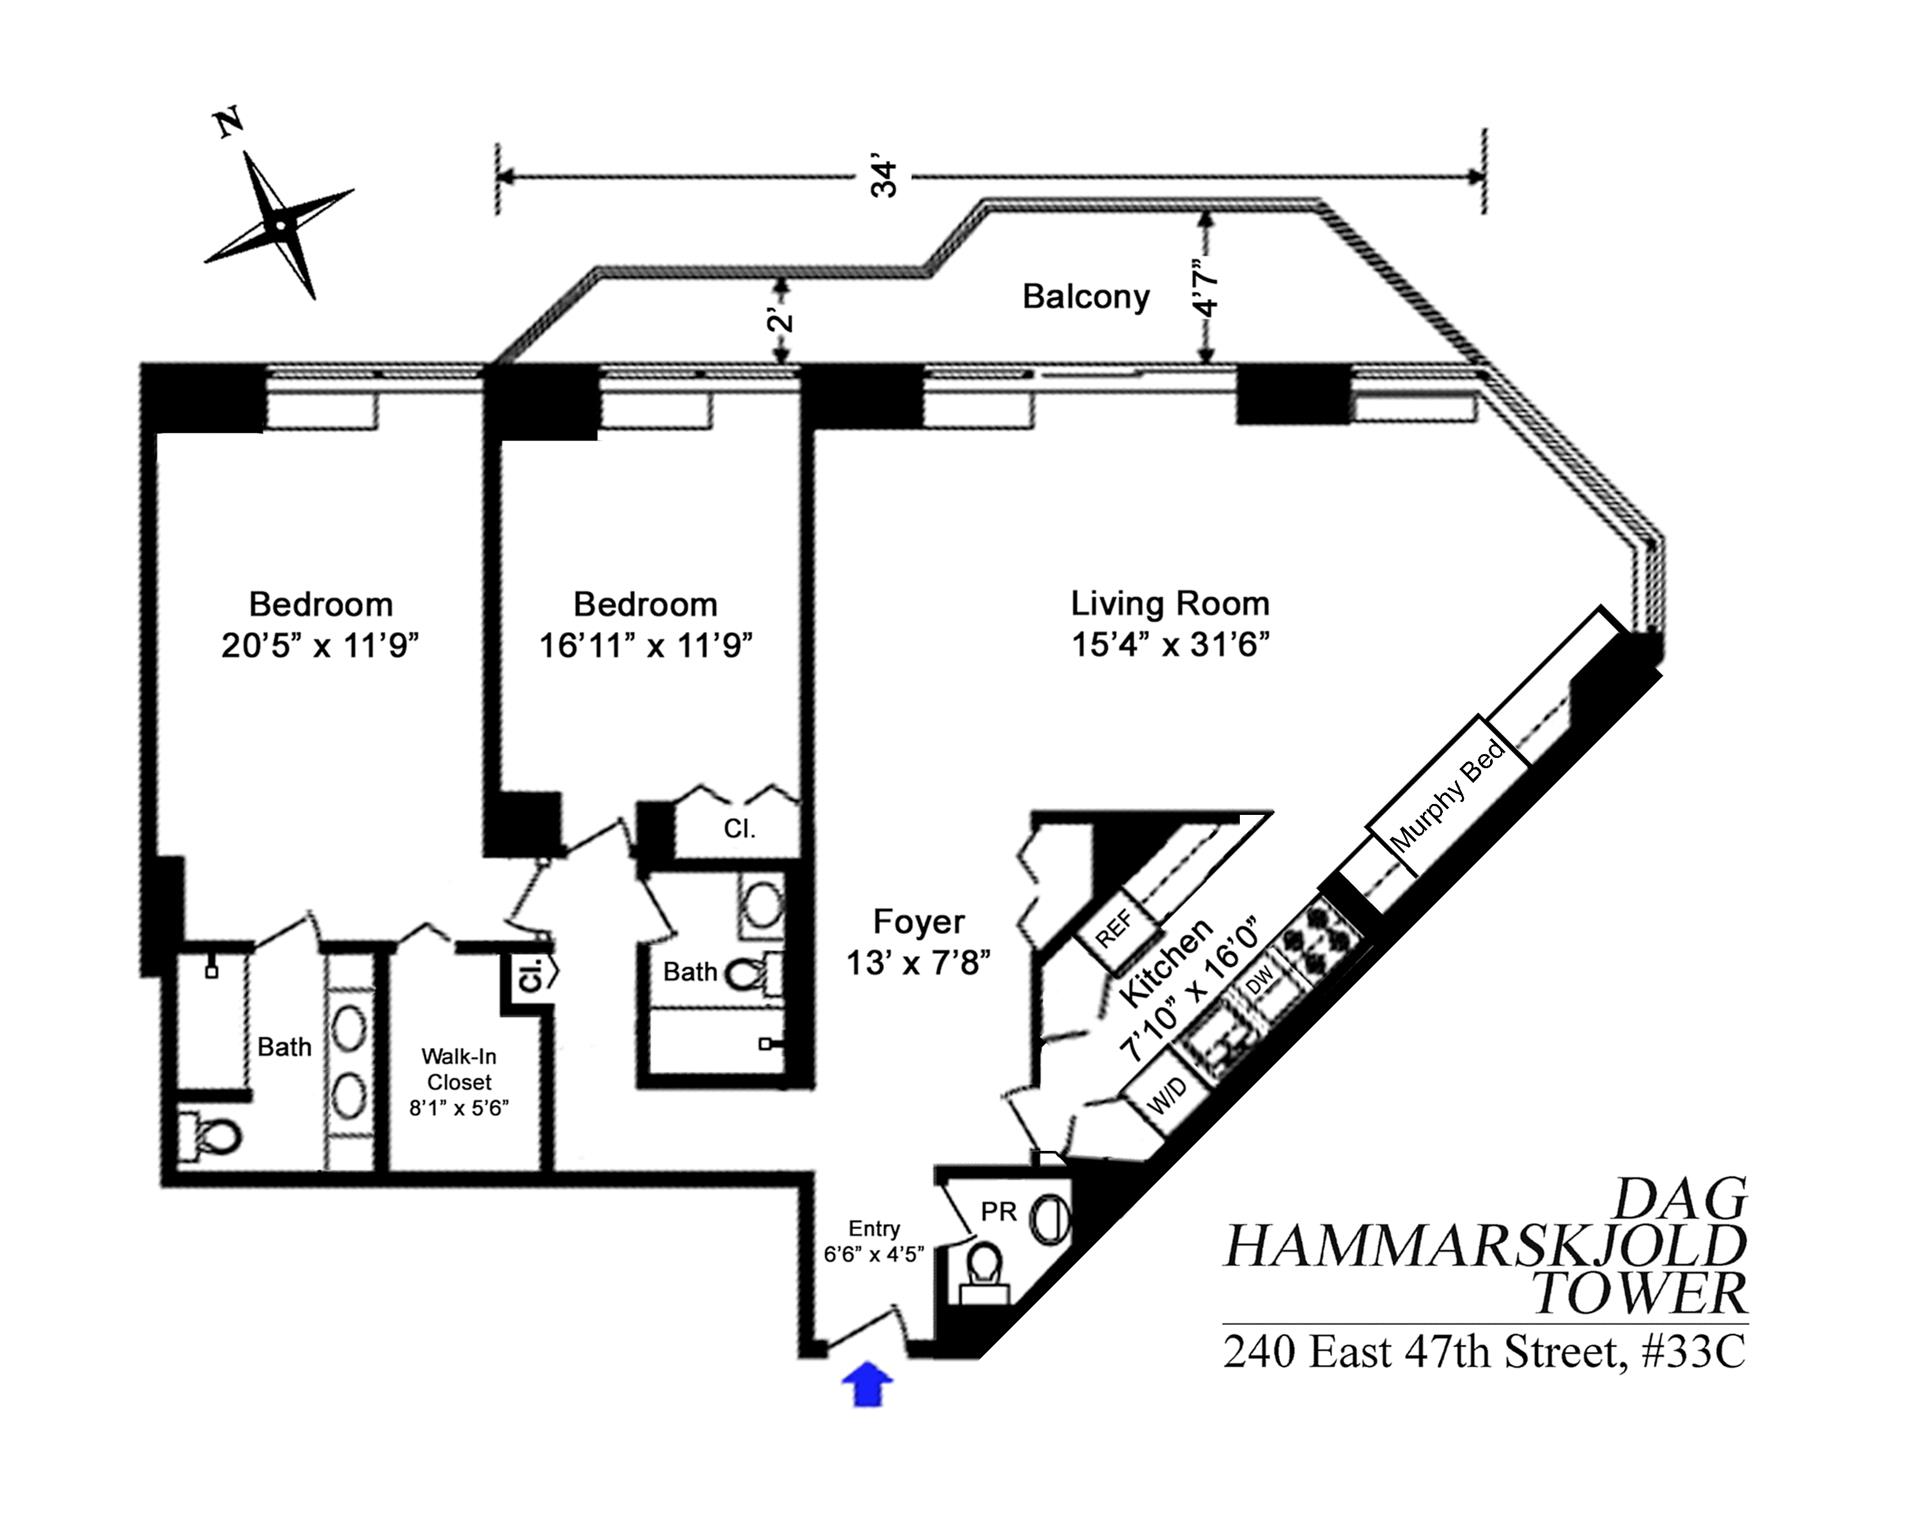 Floorplan for 240 East 47th Street, 33C